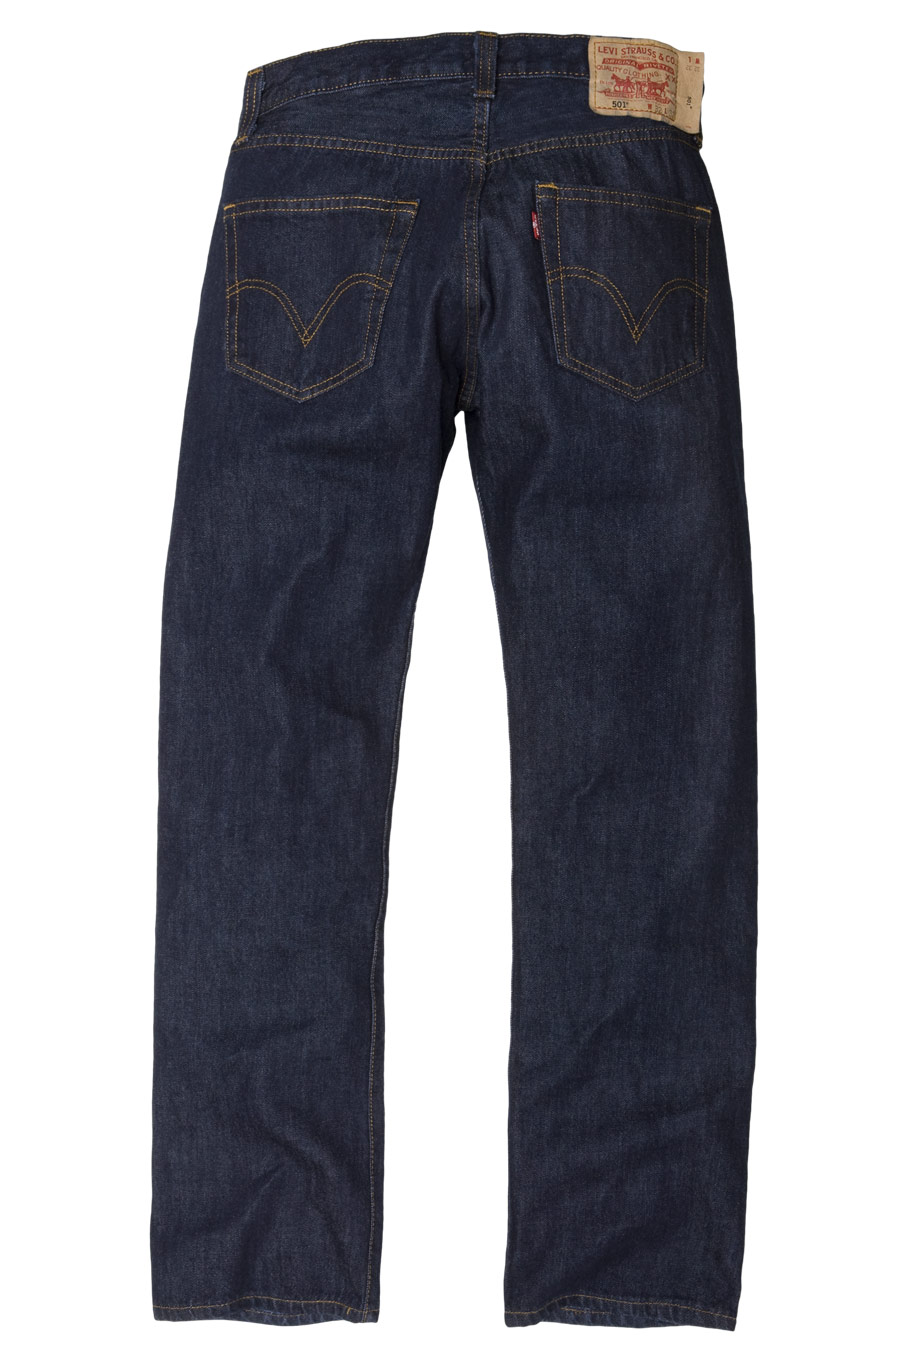 Ropa Elite, última moda: Levis jeans size 40